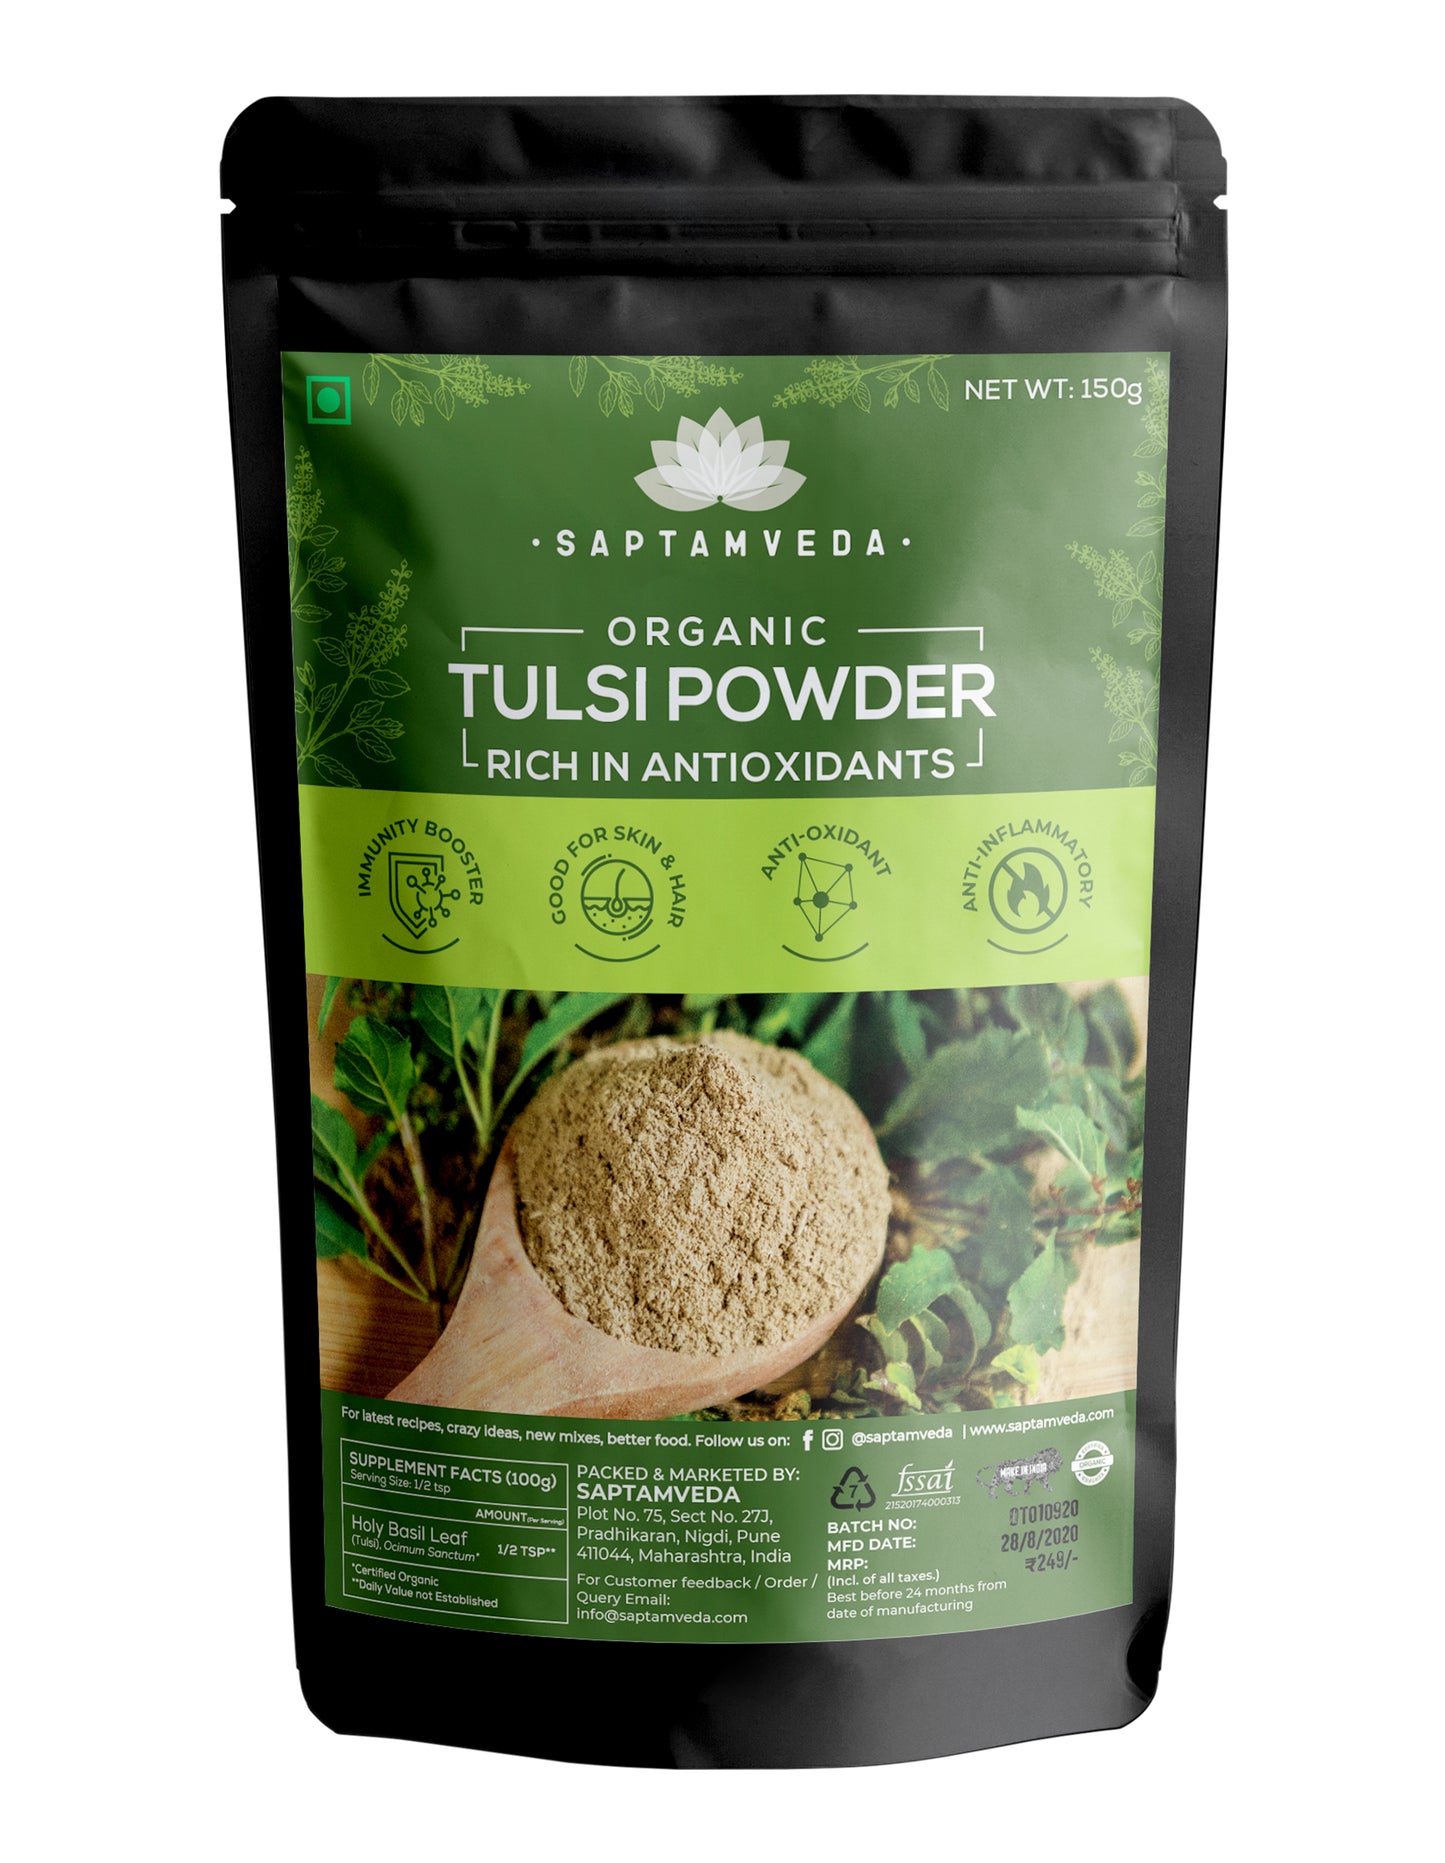 Tusli herbal powder